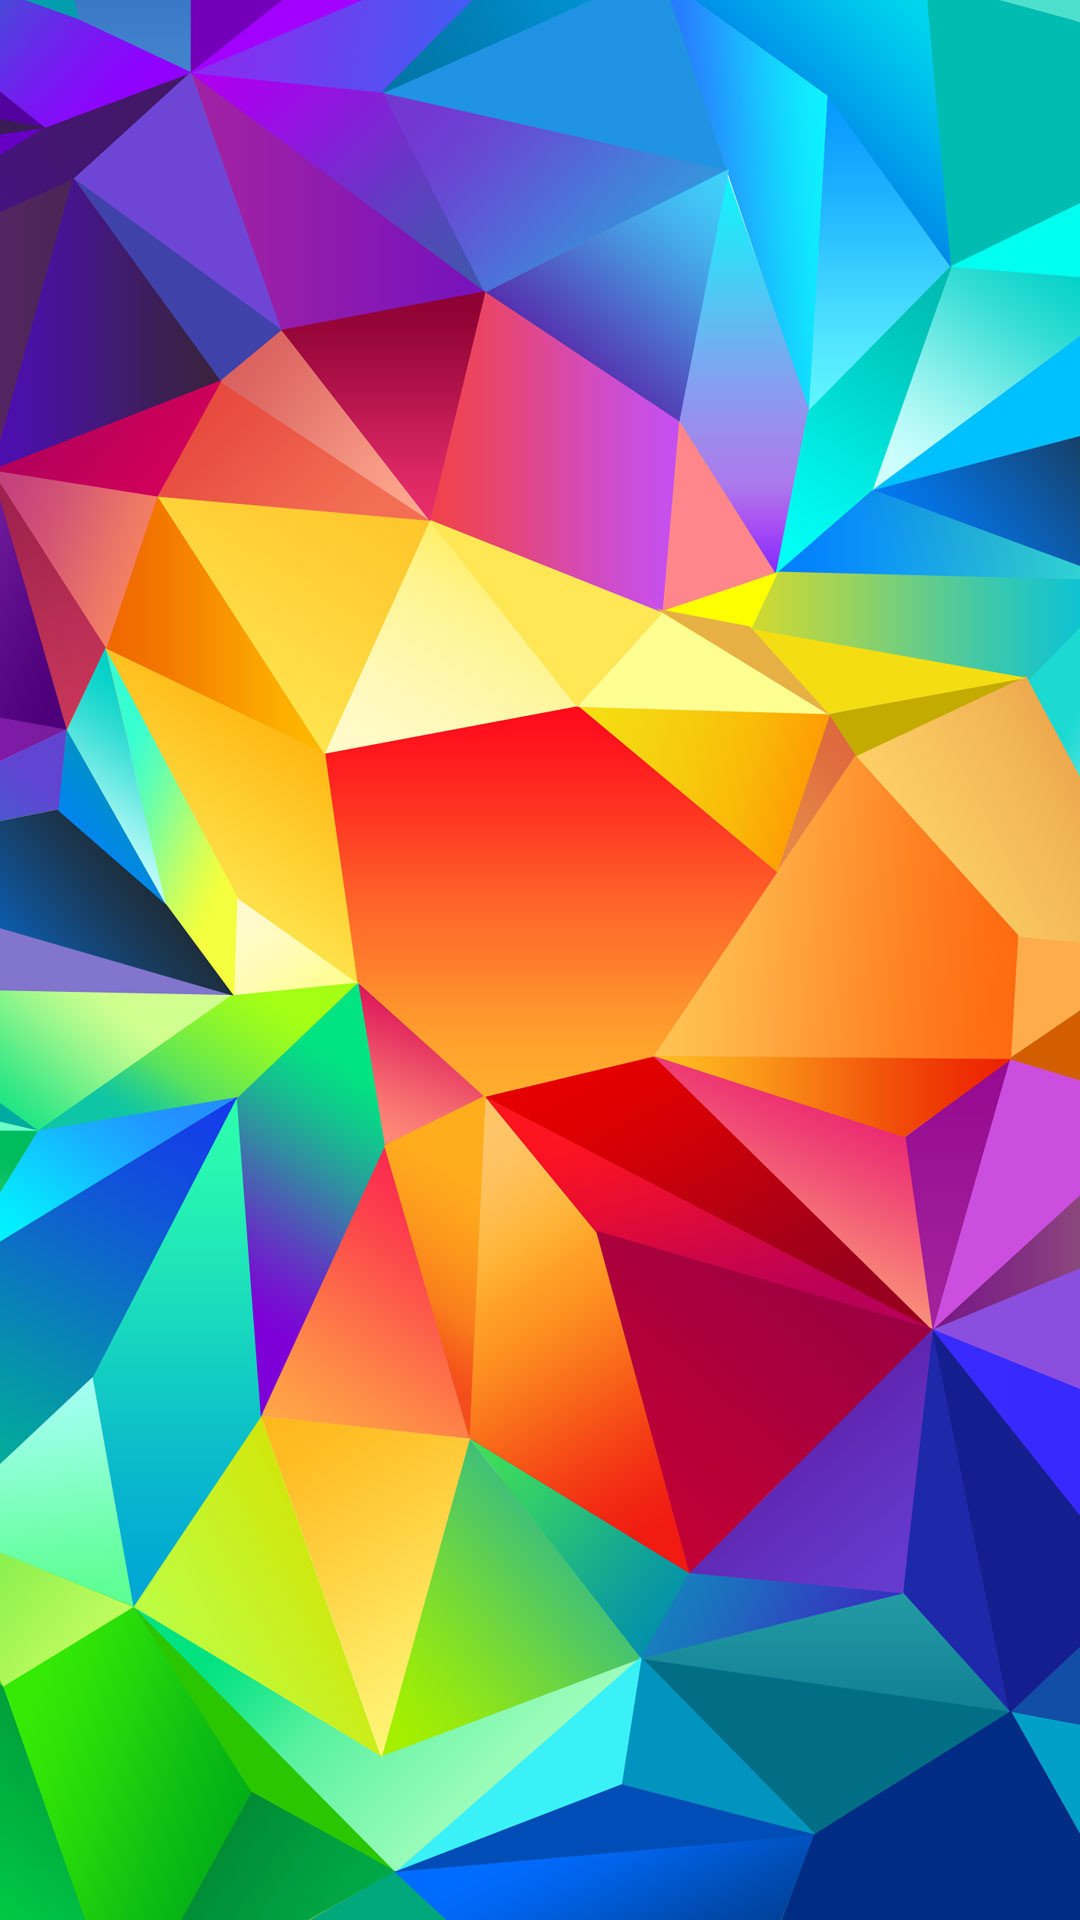 1080x1920 Colorful-Apple-iPhone-6-Plus-wallpaper